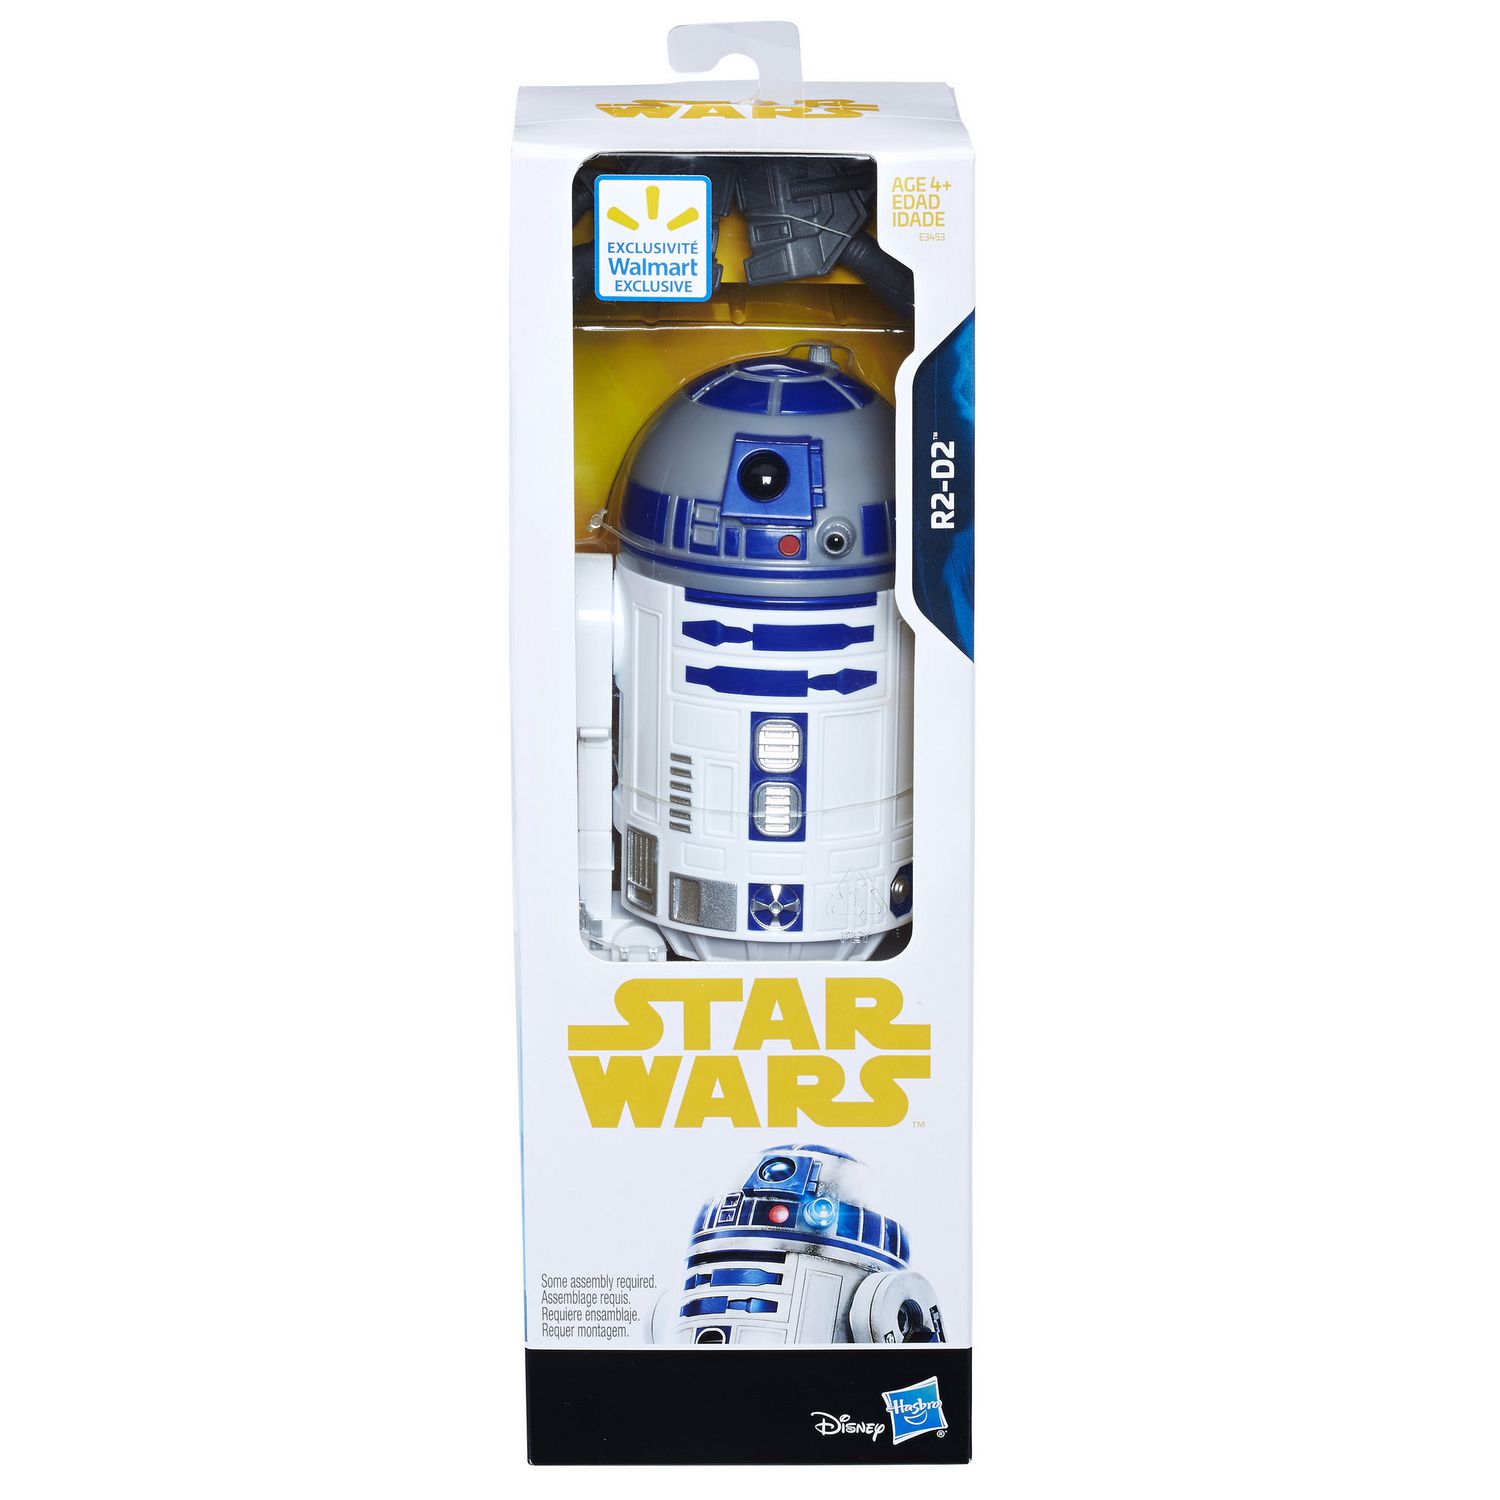 Star Wars The Last Jedi 12-inch-scale R2-D2 Walmart